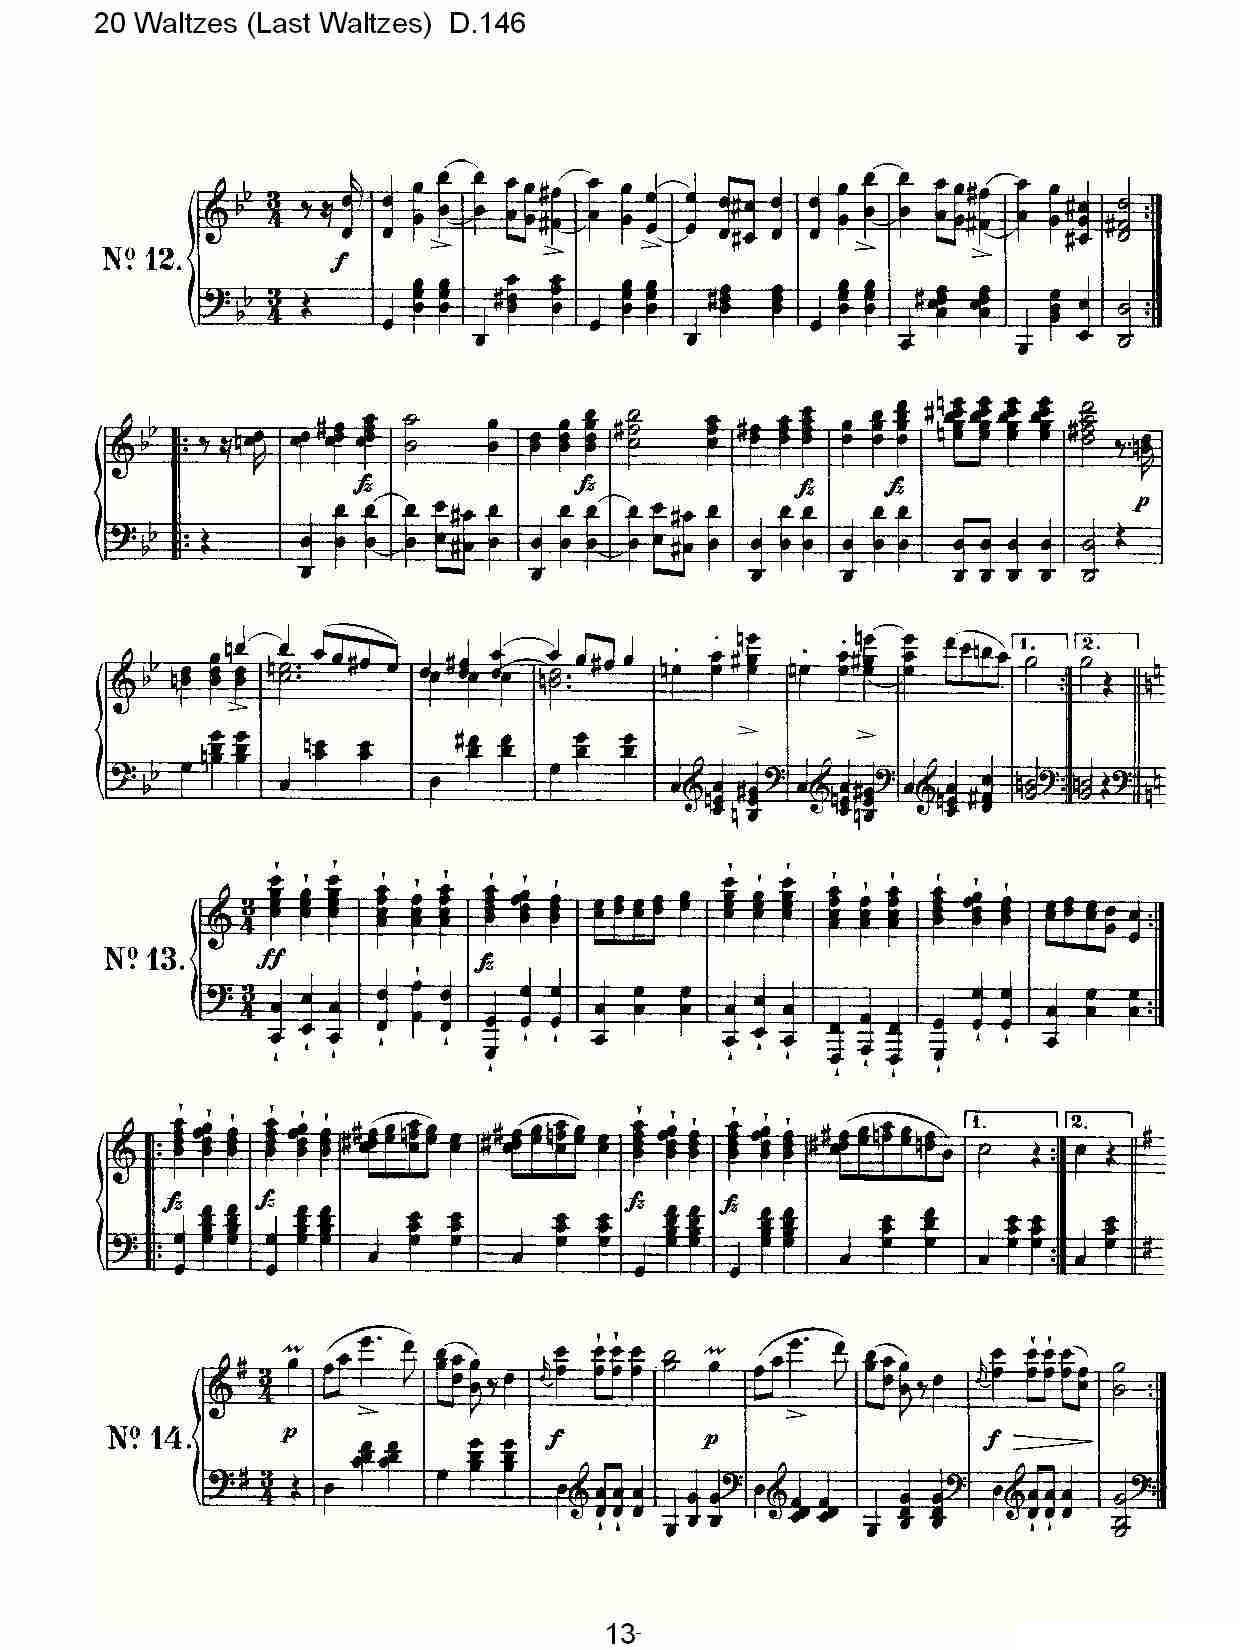 20 Waltzes（Last Waltzes) D.14）钢琴曲谱（图13）